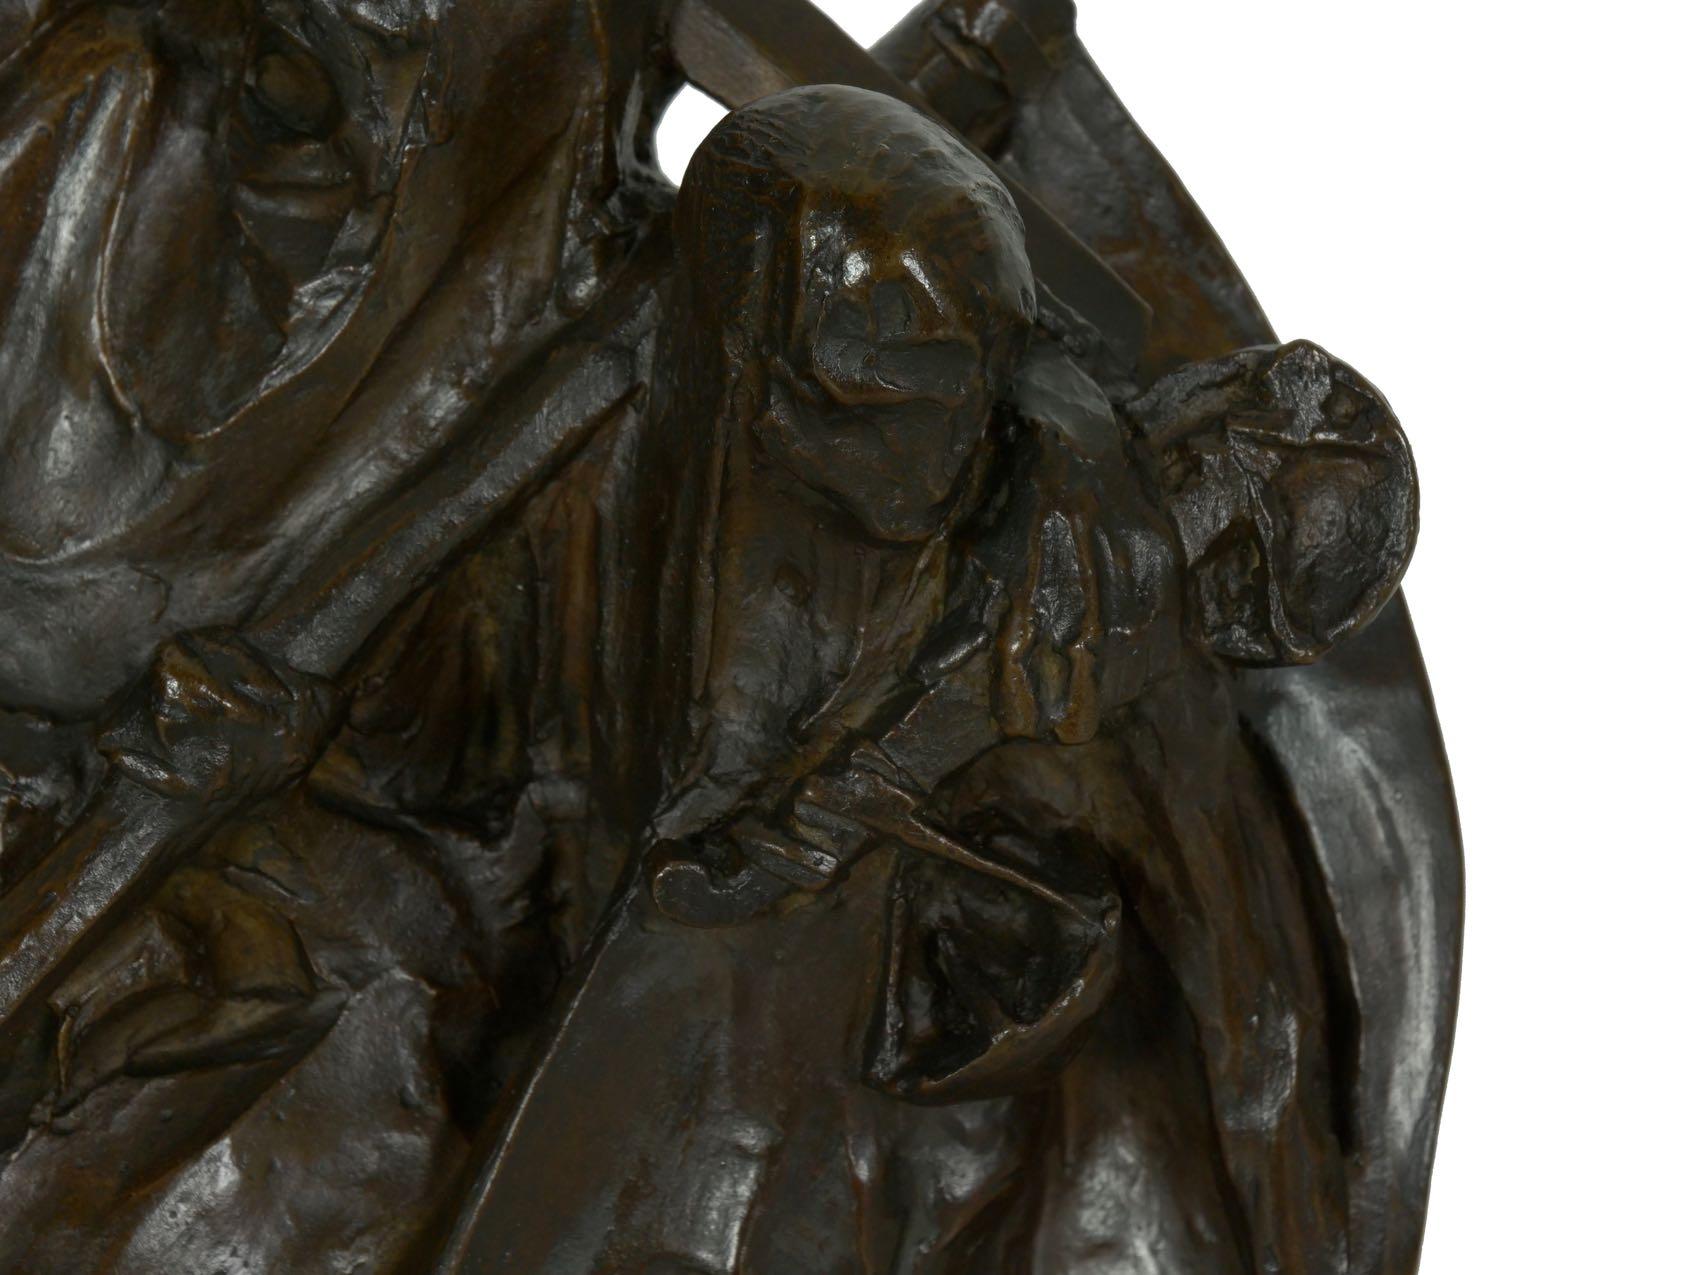 20th Century Art Deco Bronze Sculpture of “Four Horsemen of Apocalypse” by Lee Lawrie